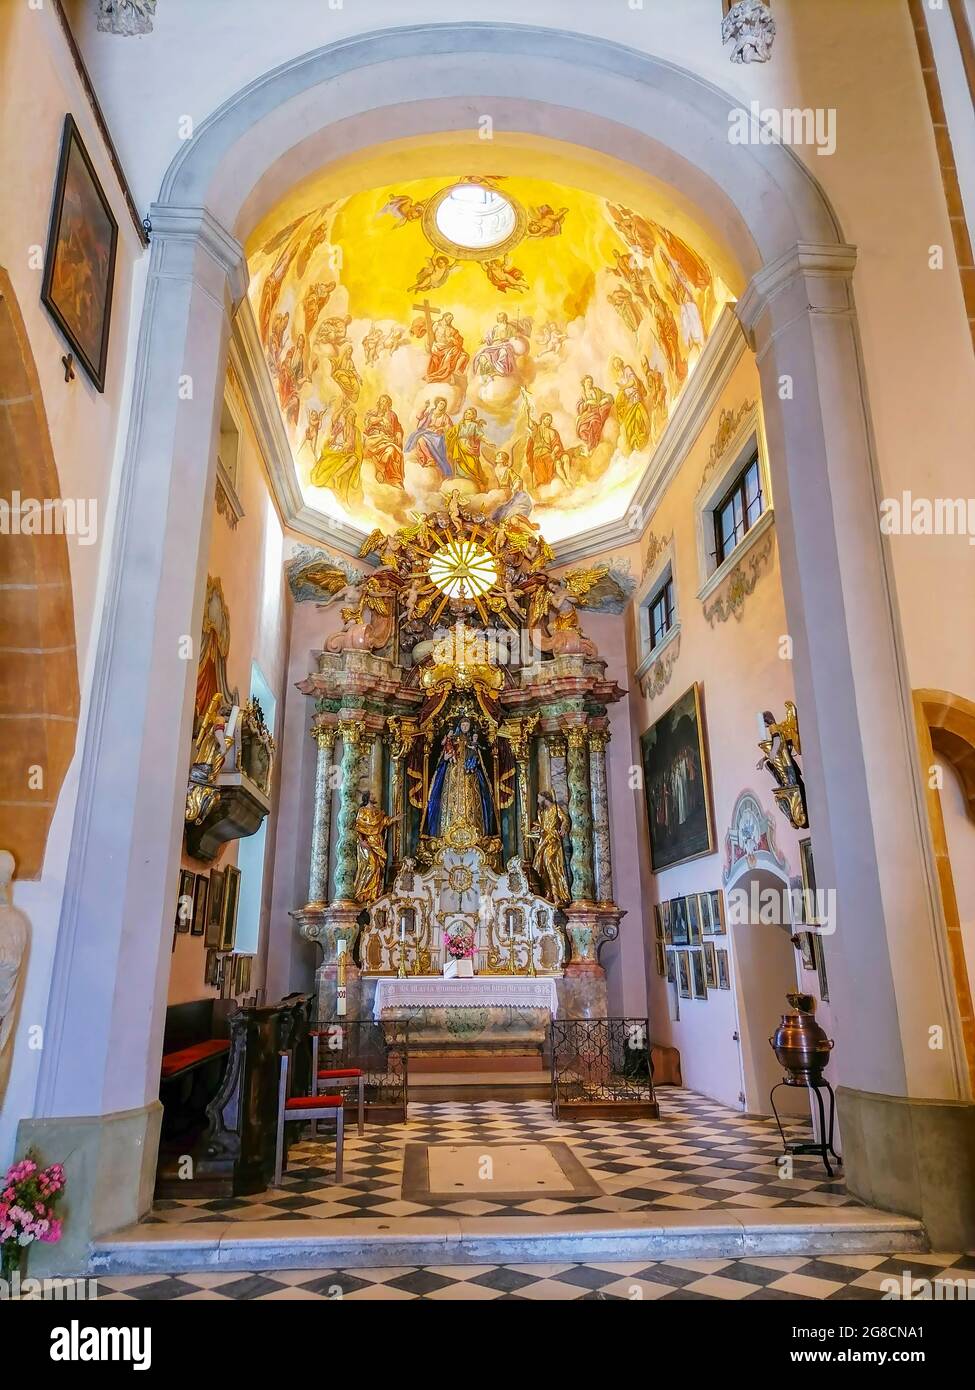 Beautiful interior of the pilgrimage Church Maria Strassengel, a 14th century Gothic church in the town of Judendorf Strassengel near Graz, Styria reg Stock Photo